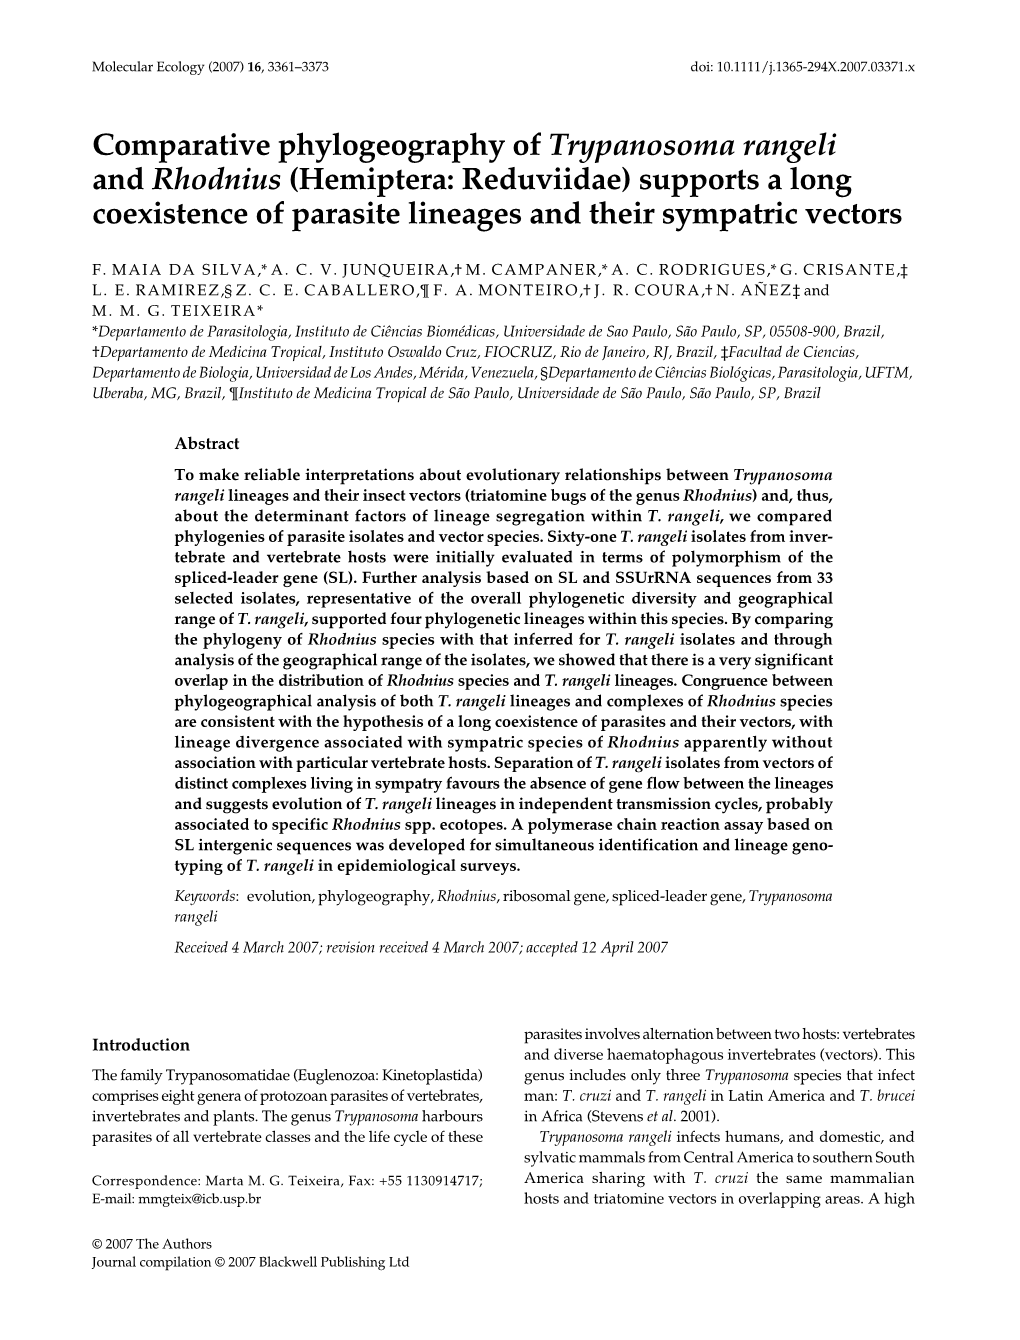 Comparative Phylogeography of Trypanosoma Rangeli and Rhodnius